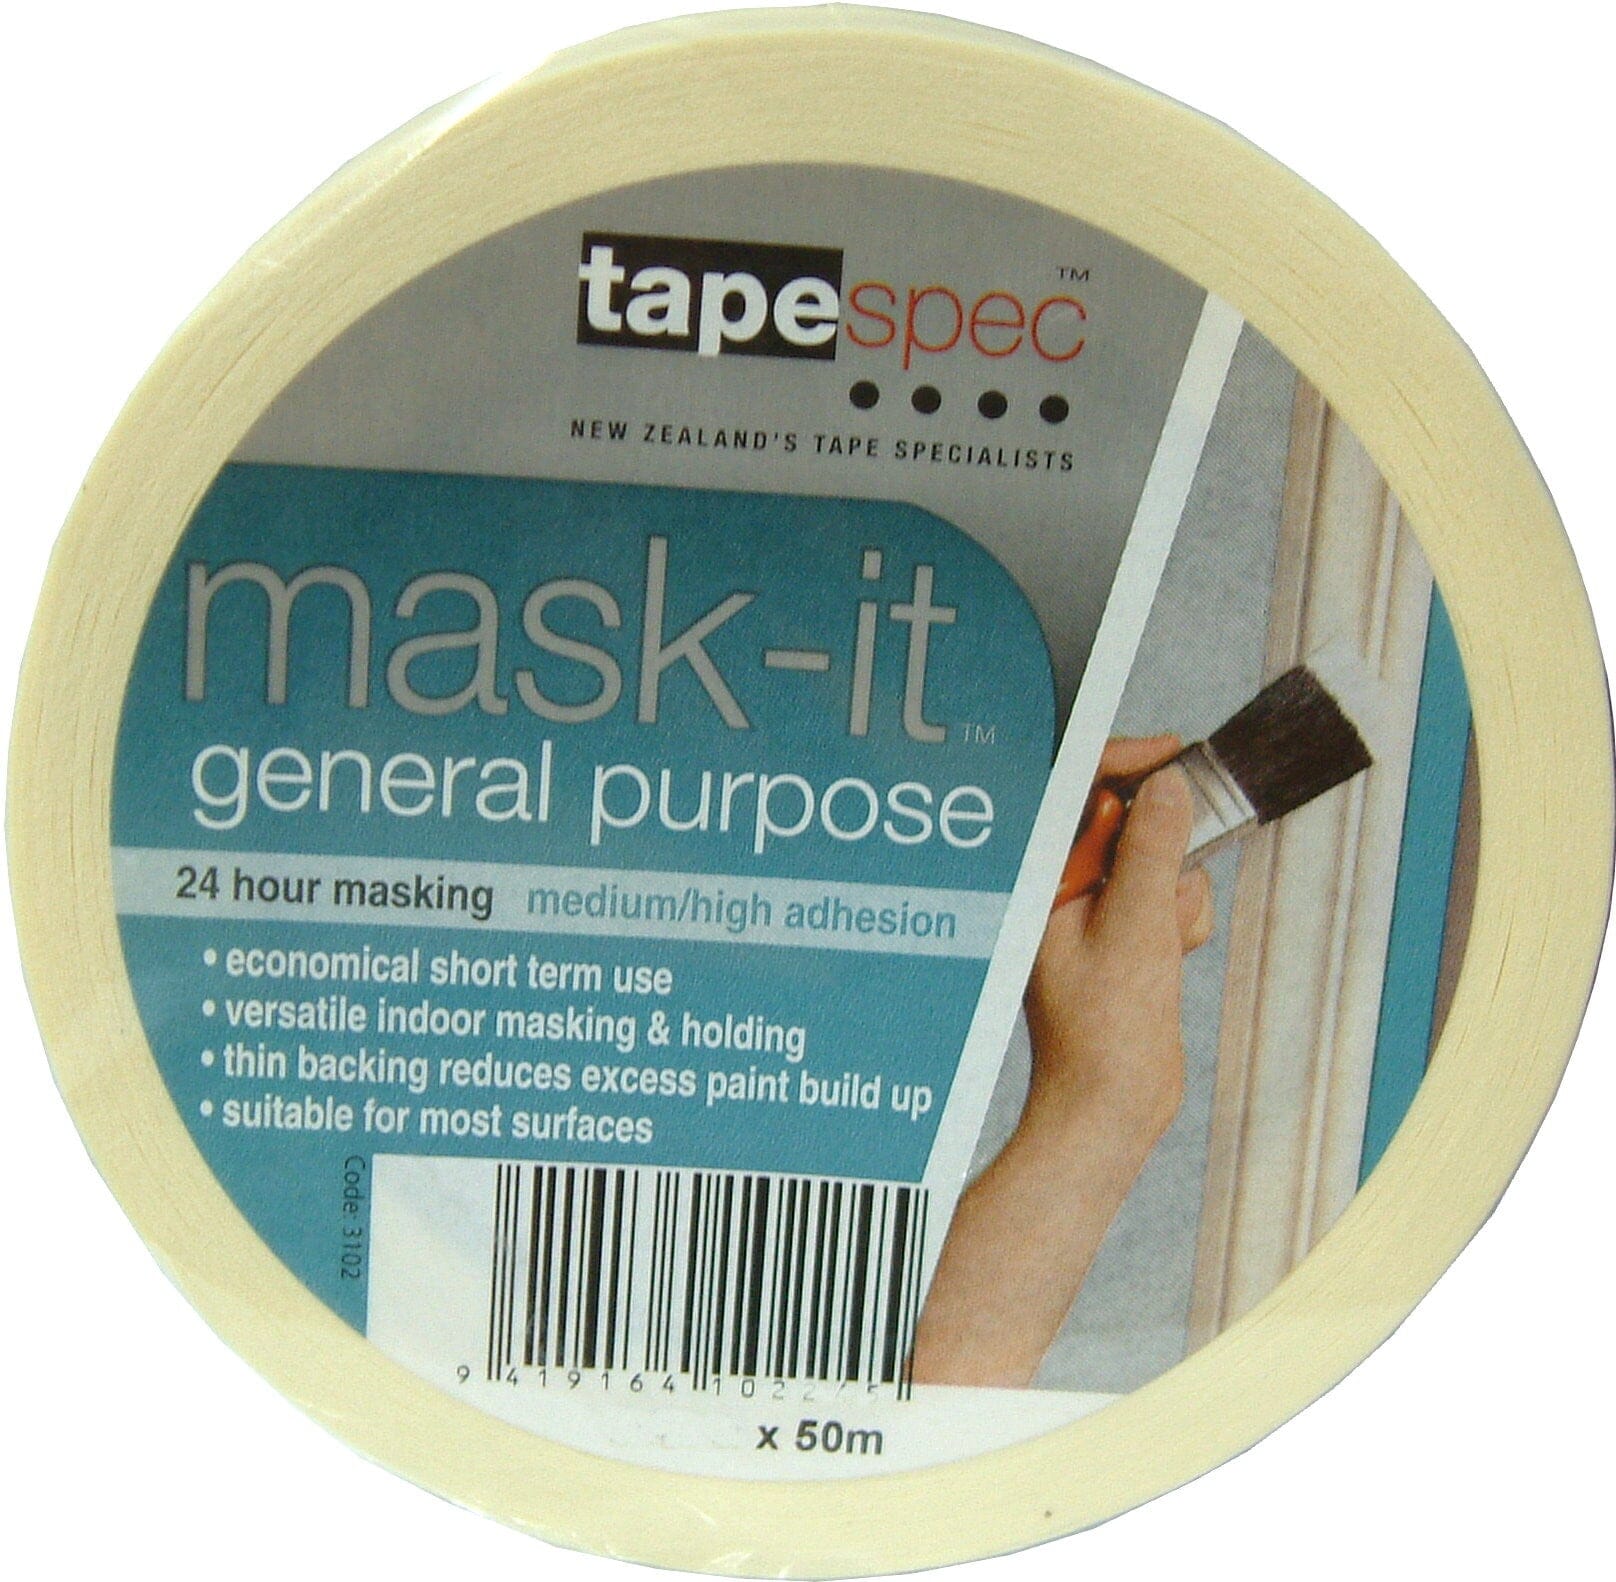 Tapespec Masking Tape - 50m Roll #312 48mm Mask-it